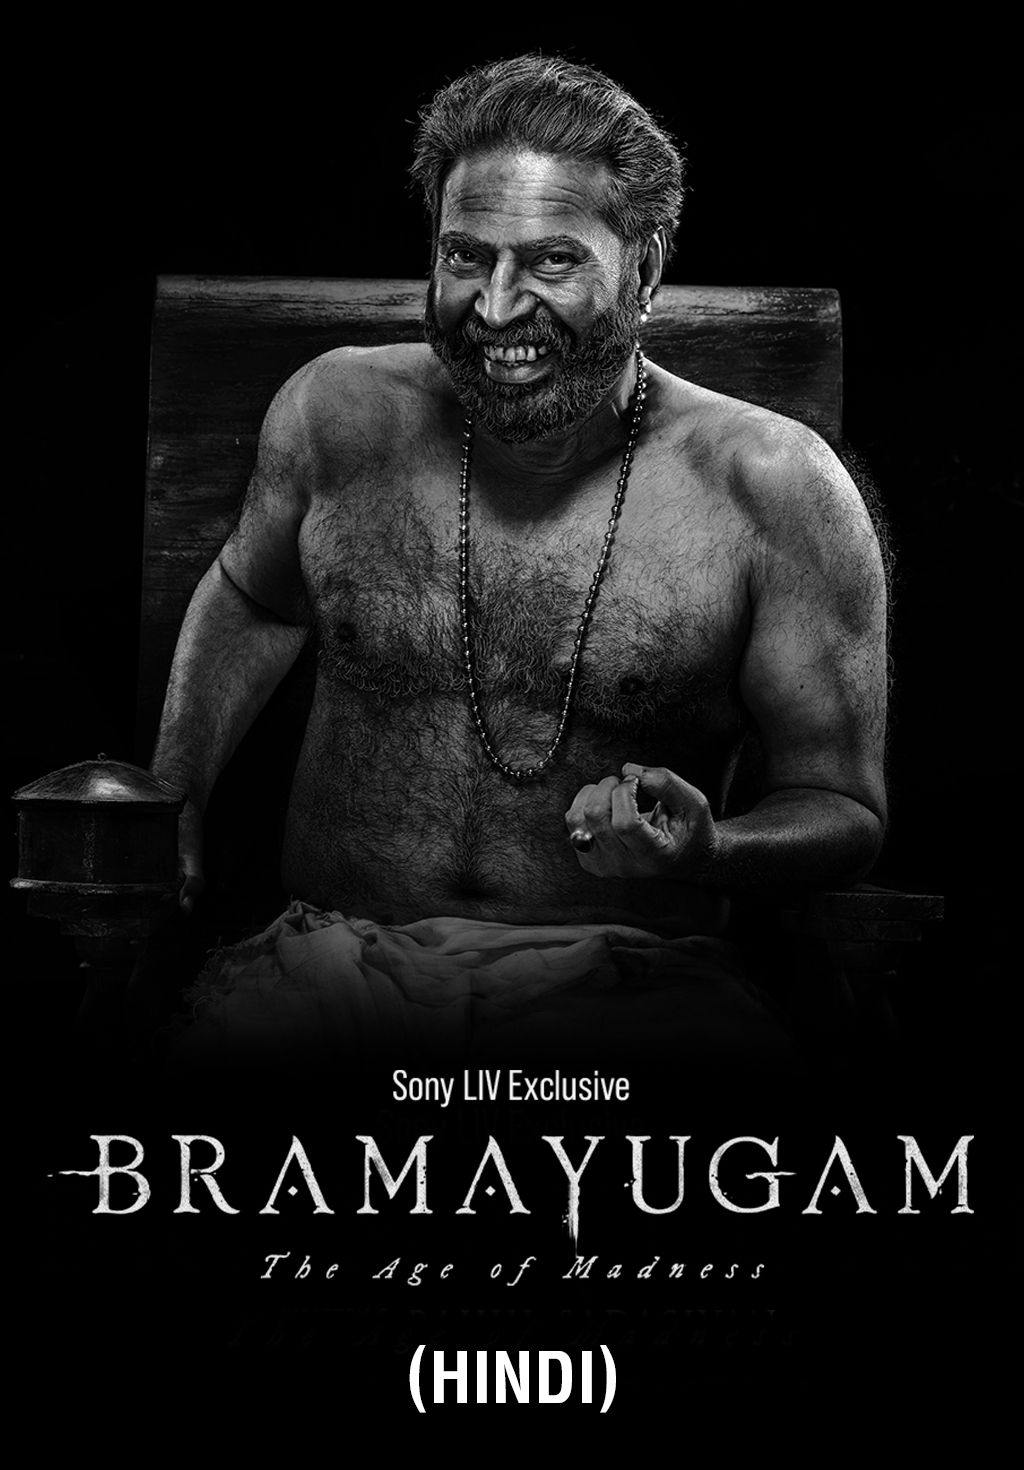 Bramayugam (Hindi)